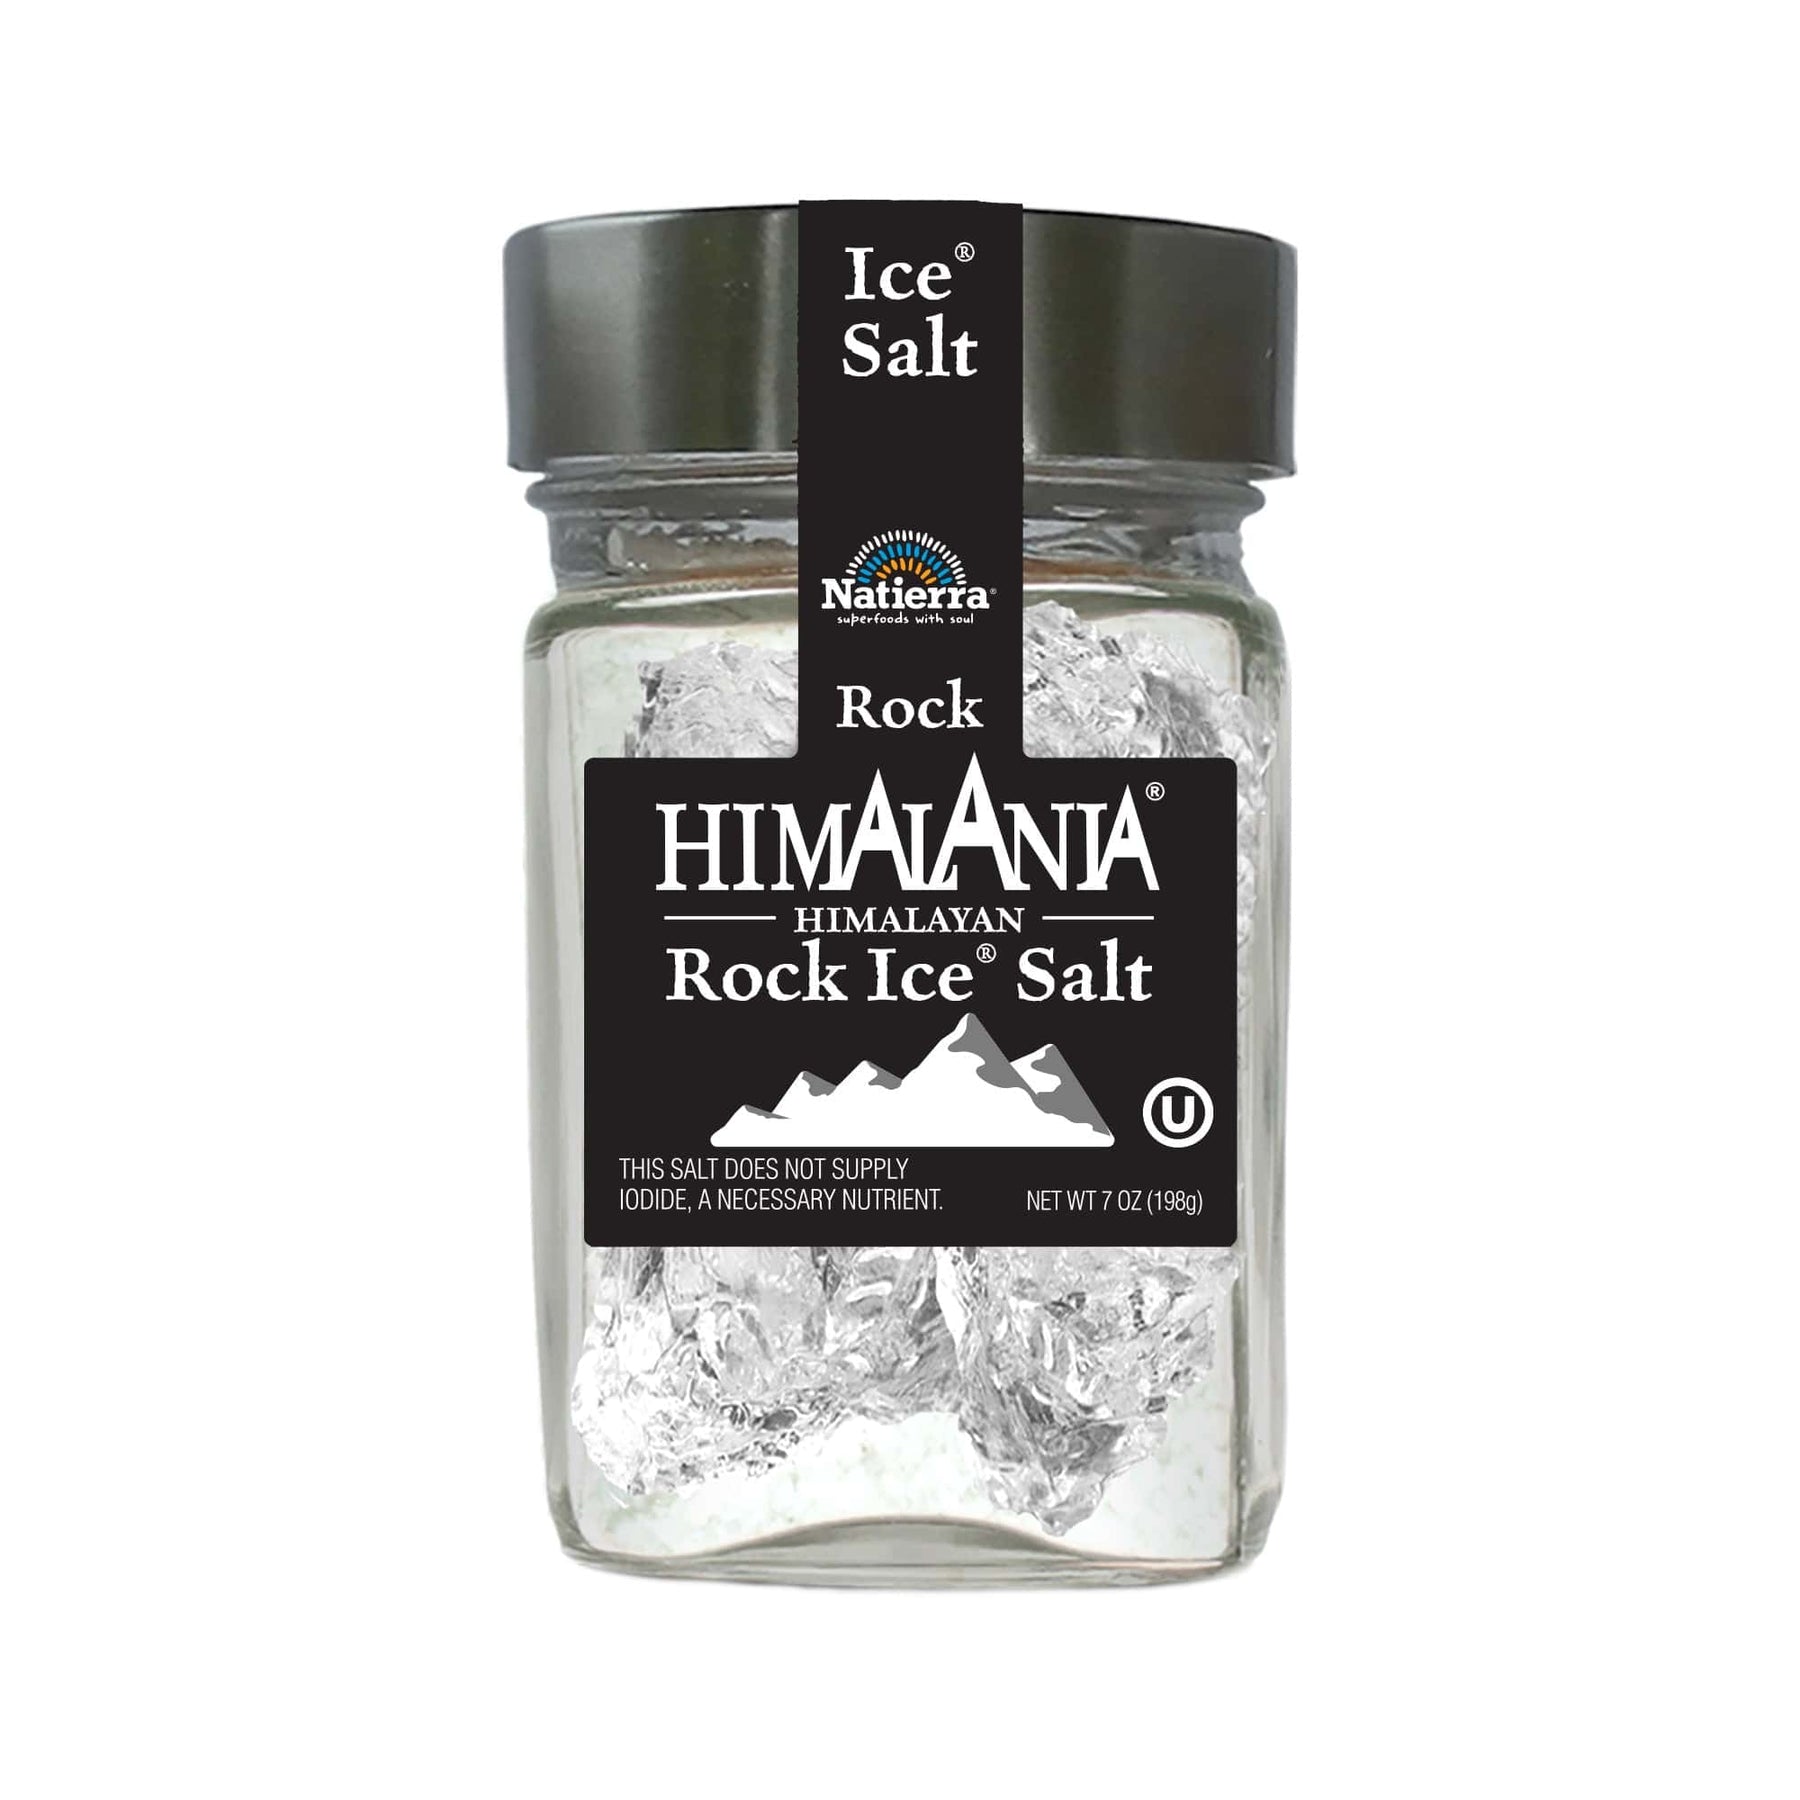 Natierra Himalania Rock Ice Salt  7 oz jar